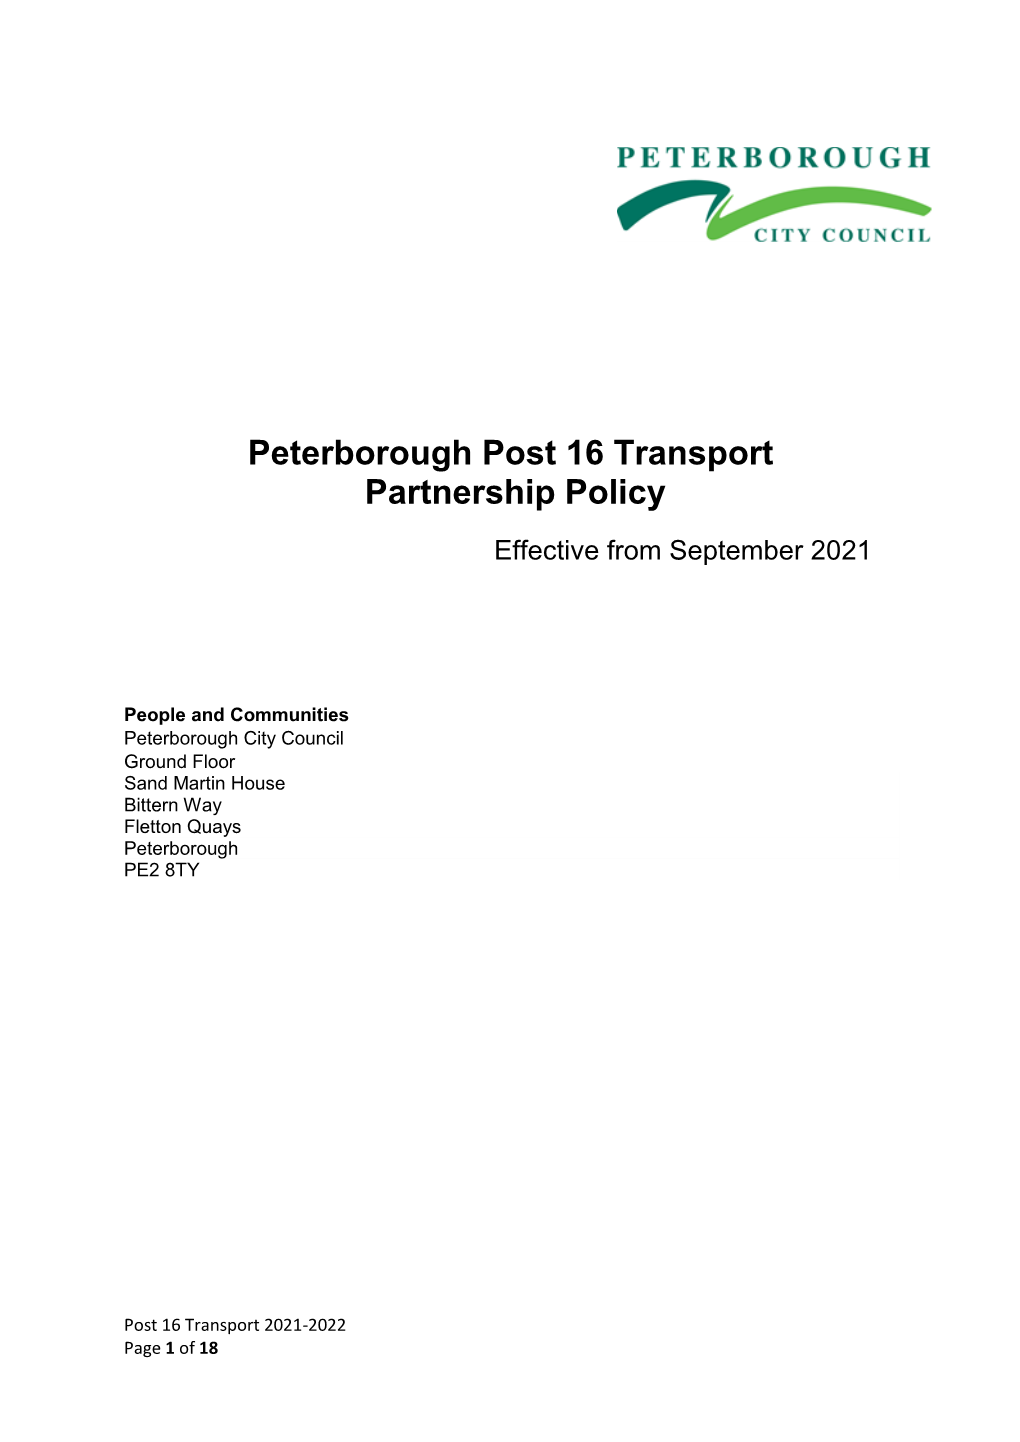 Peterborough Post 16 Transport 2021